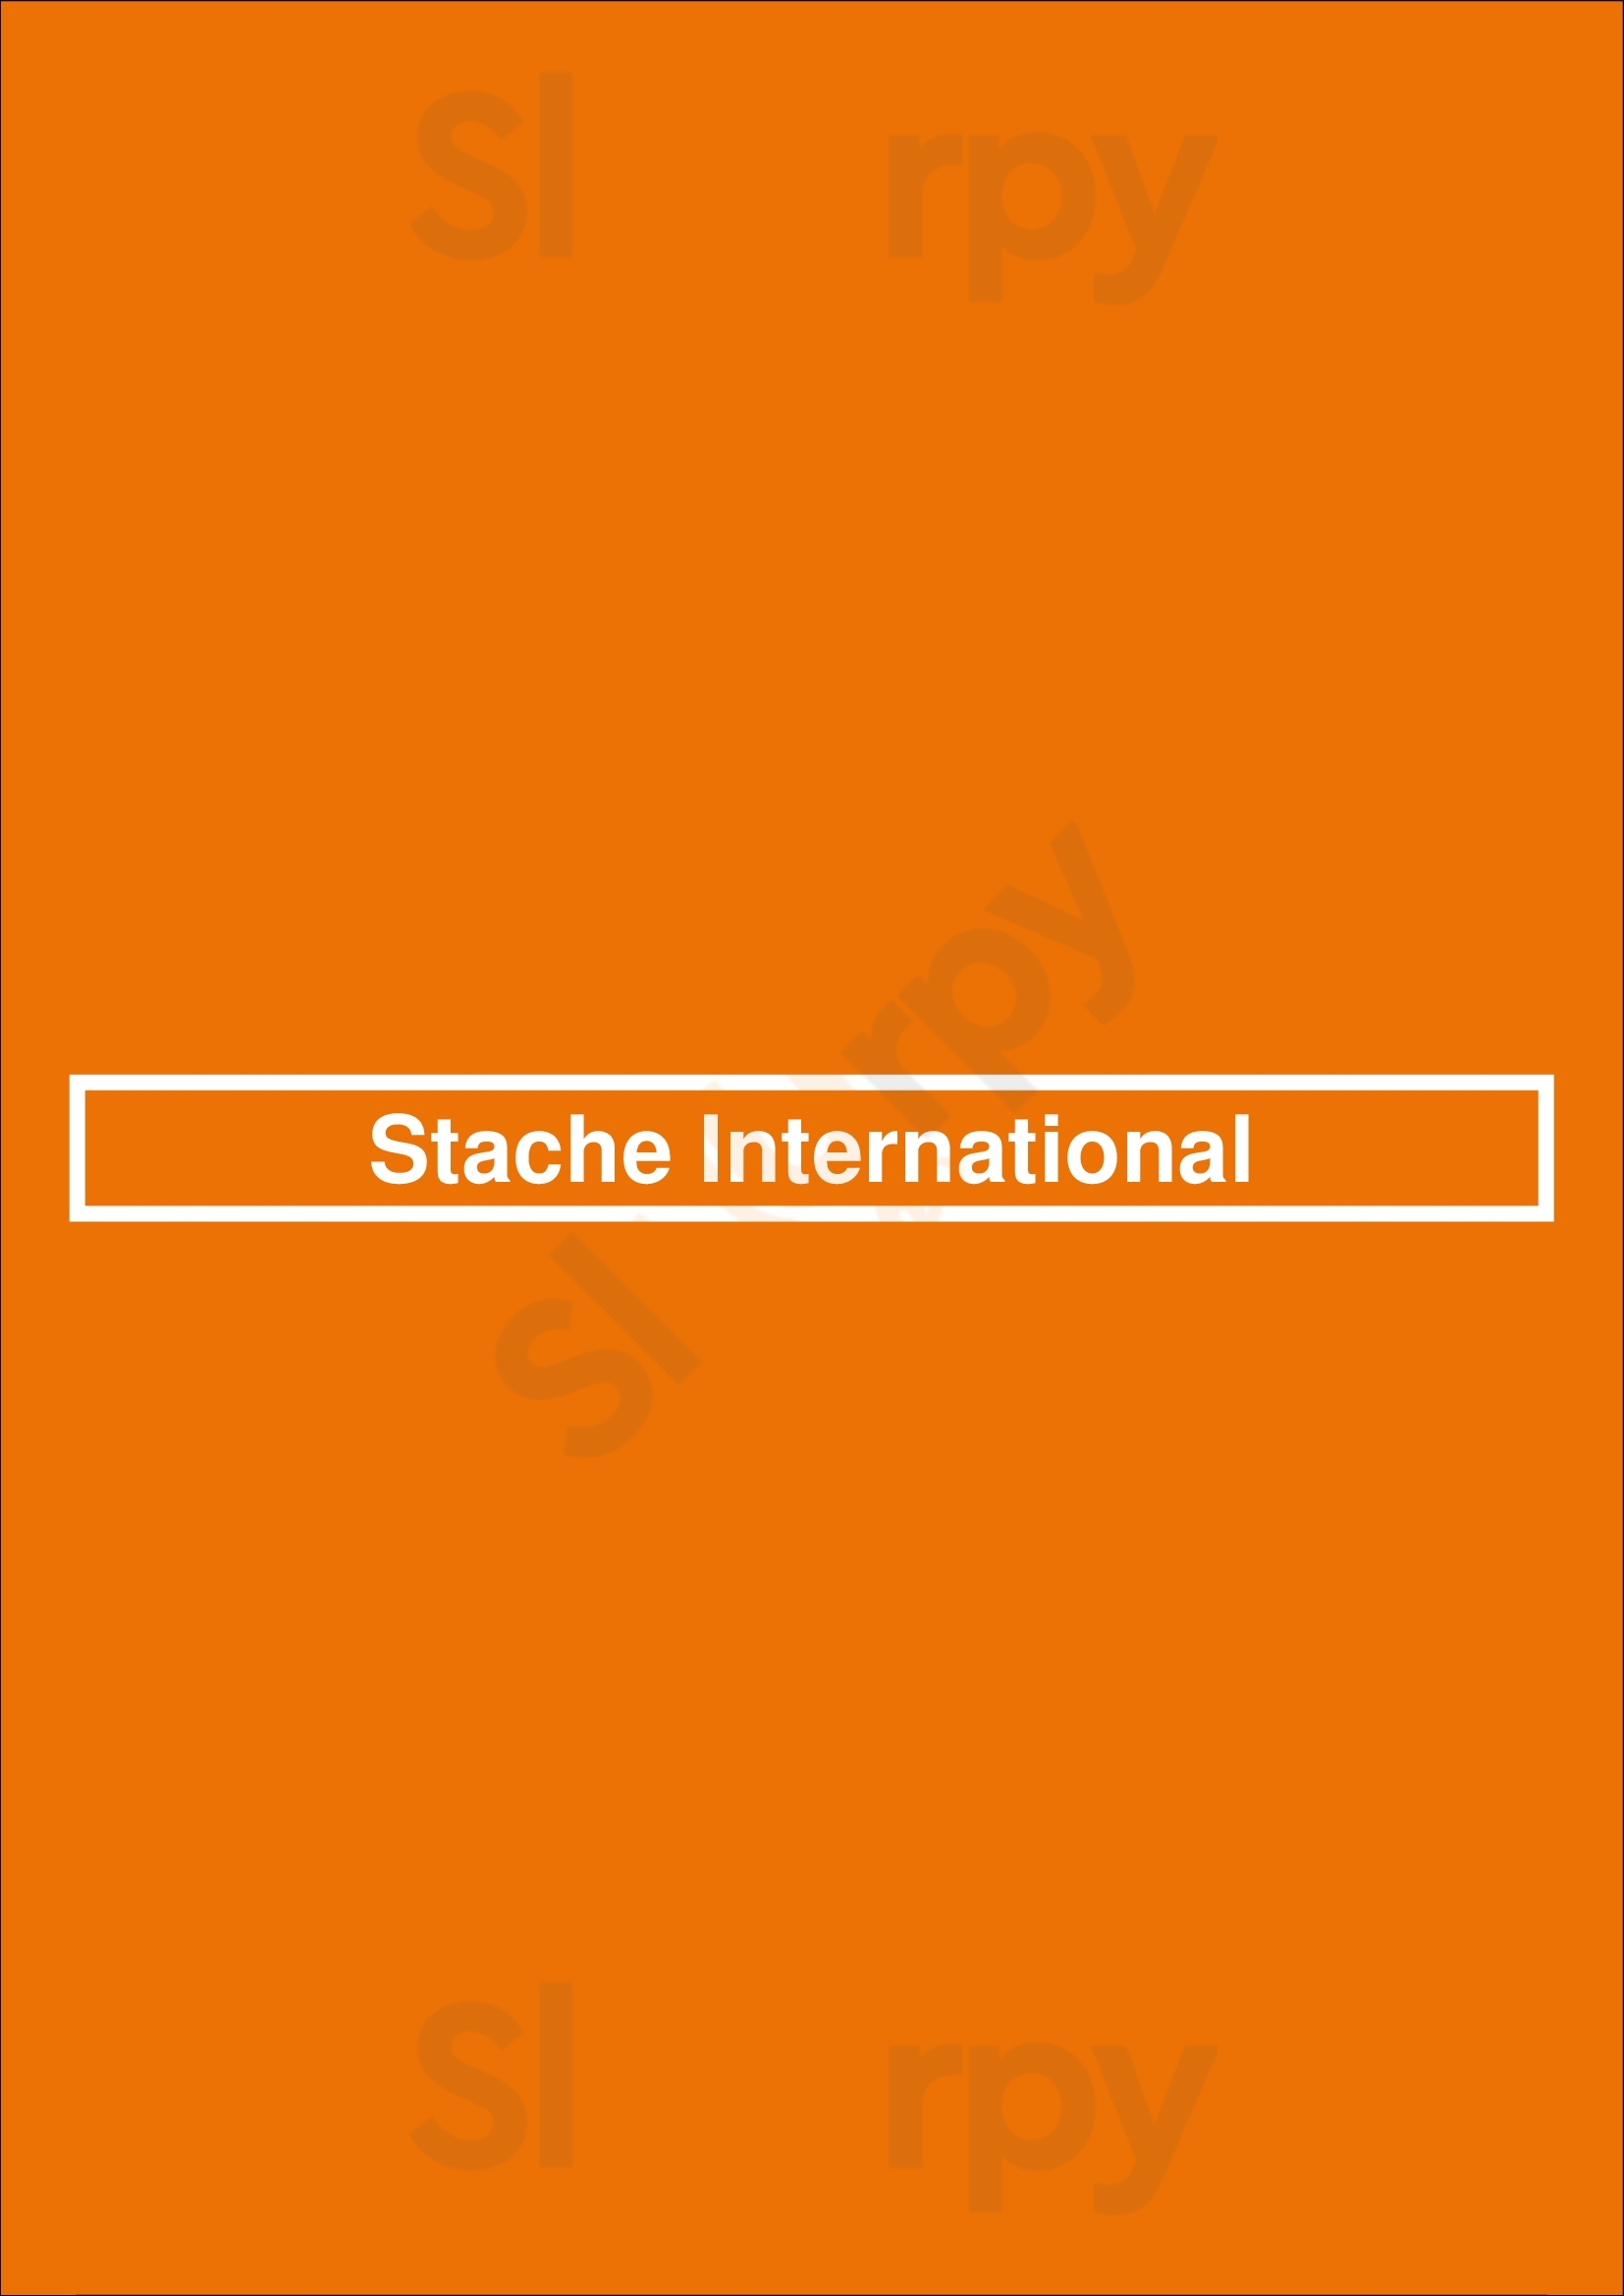 Stache International Detroit Menu - 1